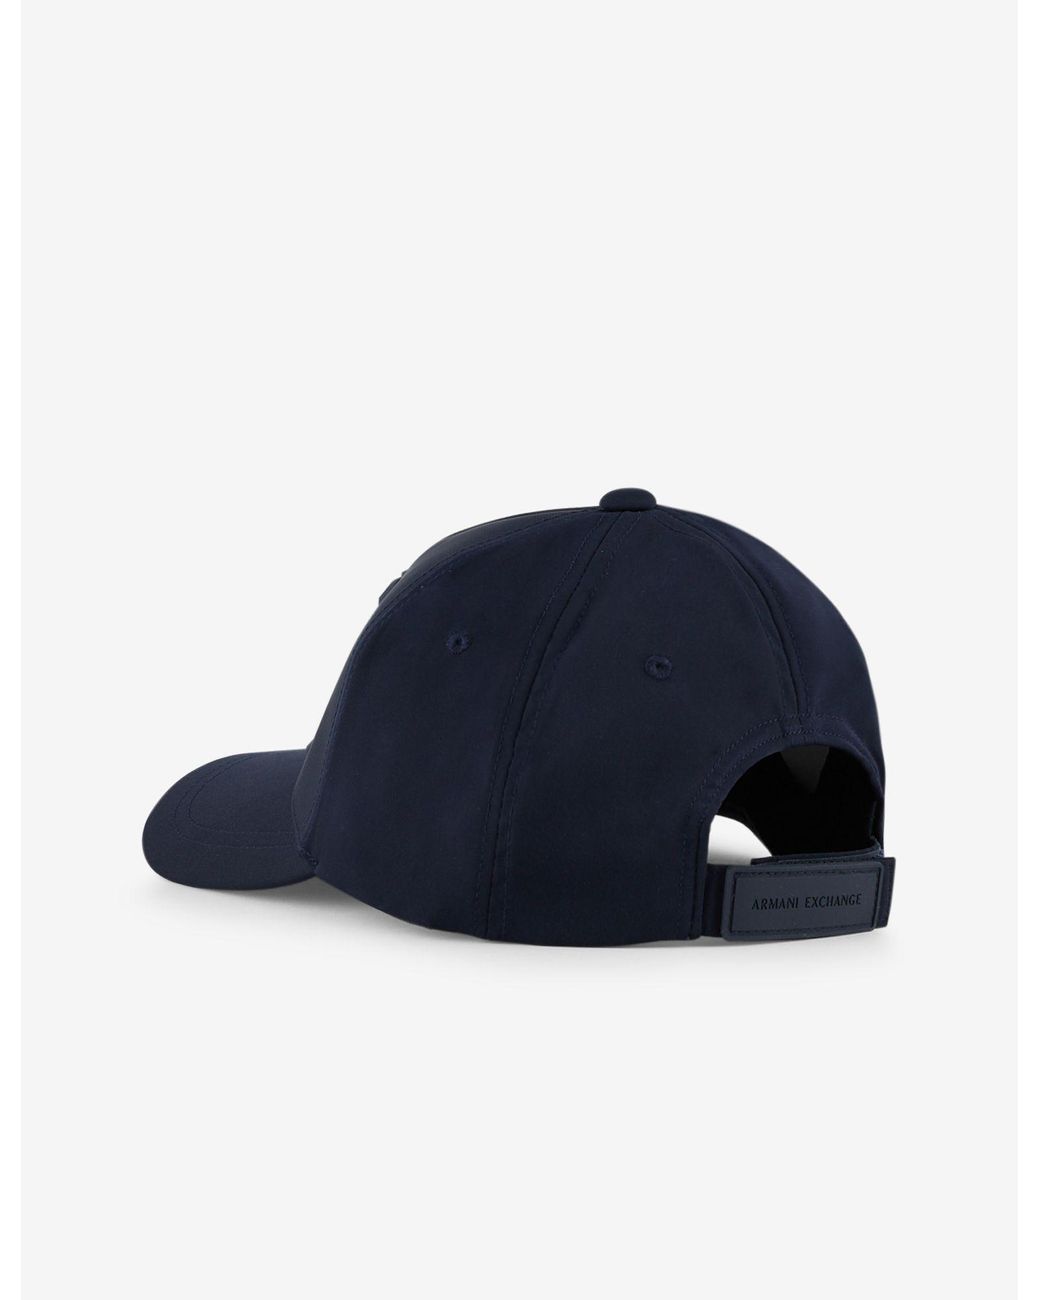 Armani Exchange Rubber Logo Ax Hat in Navy Blue (Blue) for Men - Lyst